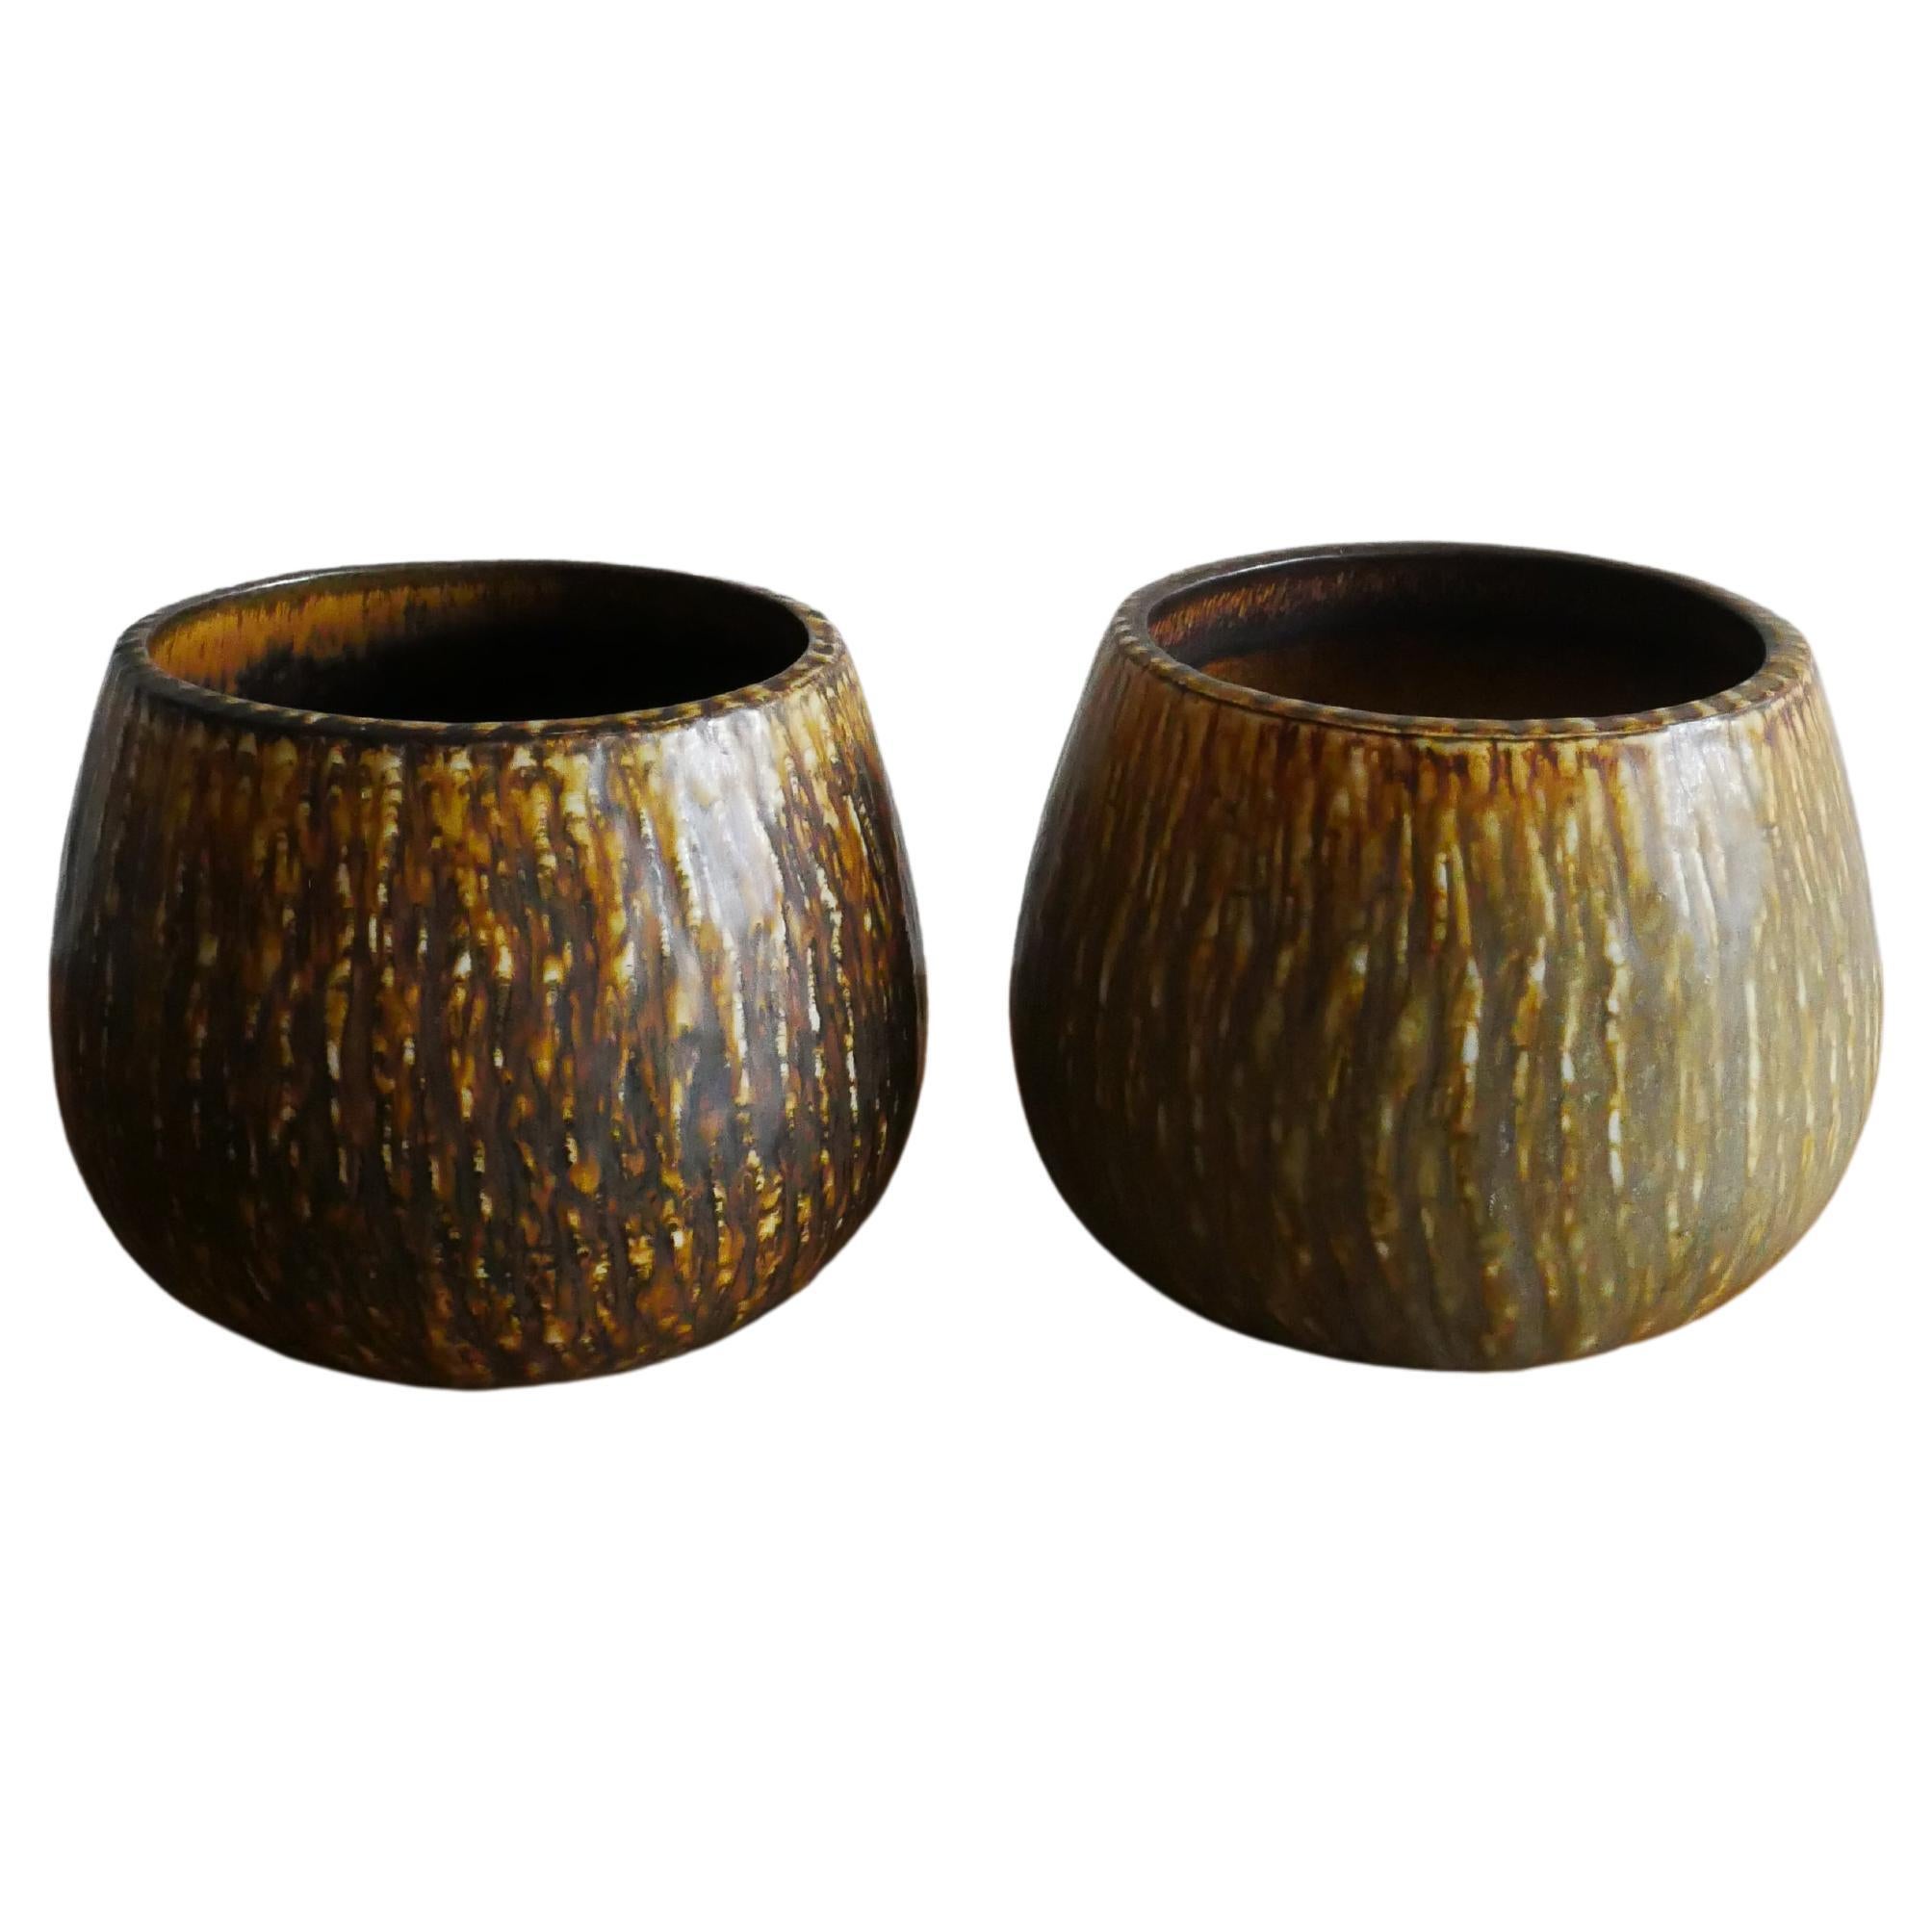 A Set of two Ceramic Bowls "Rubus" Gunnar Nylund for Rörstrand Sweden, 1950s